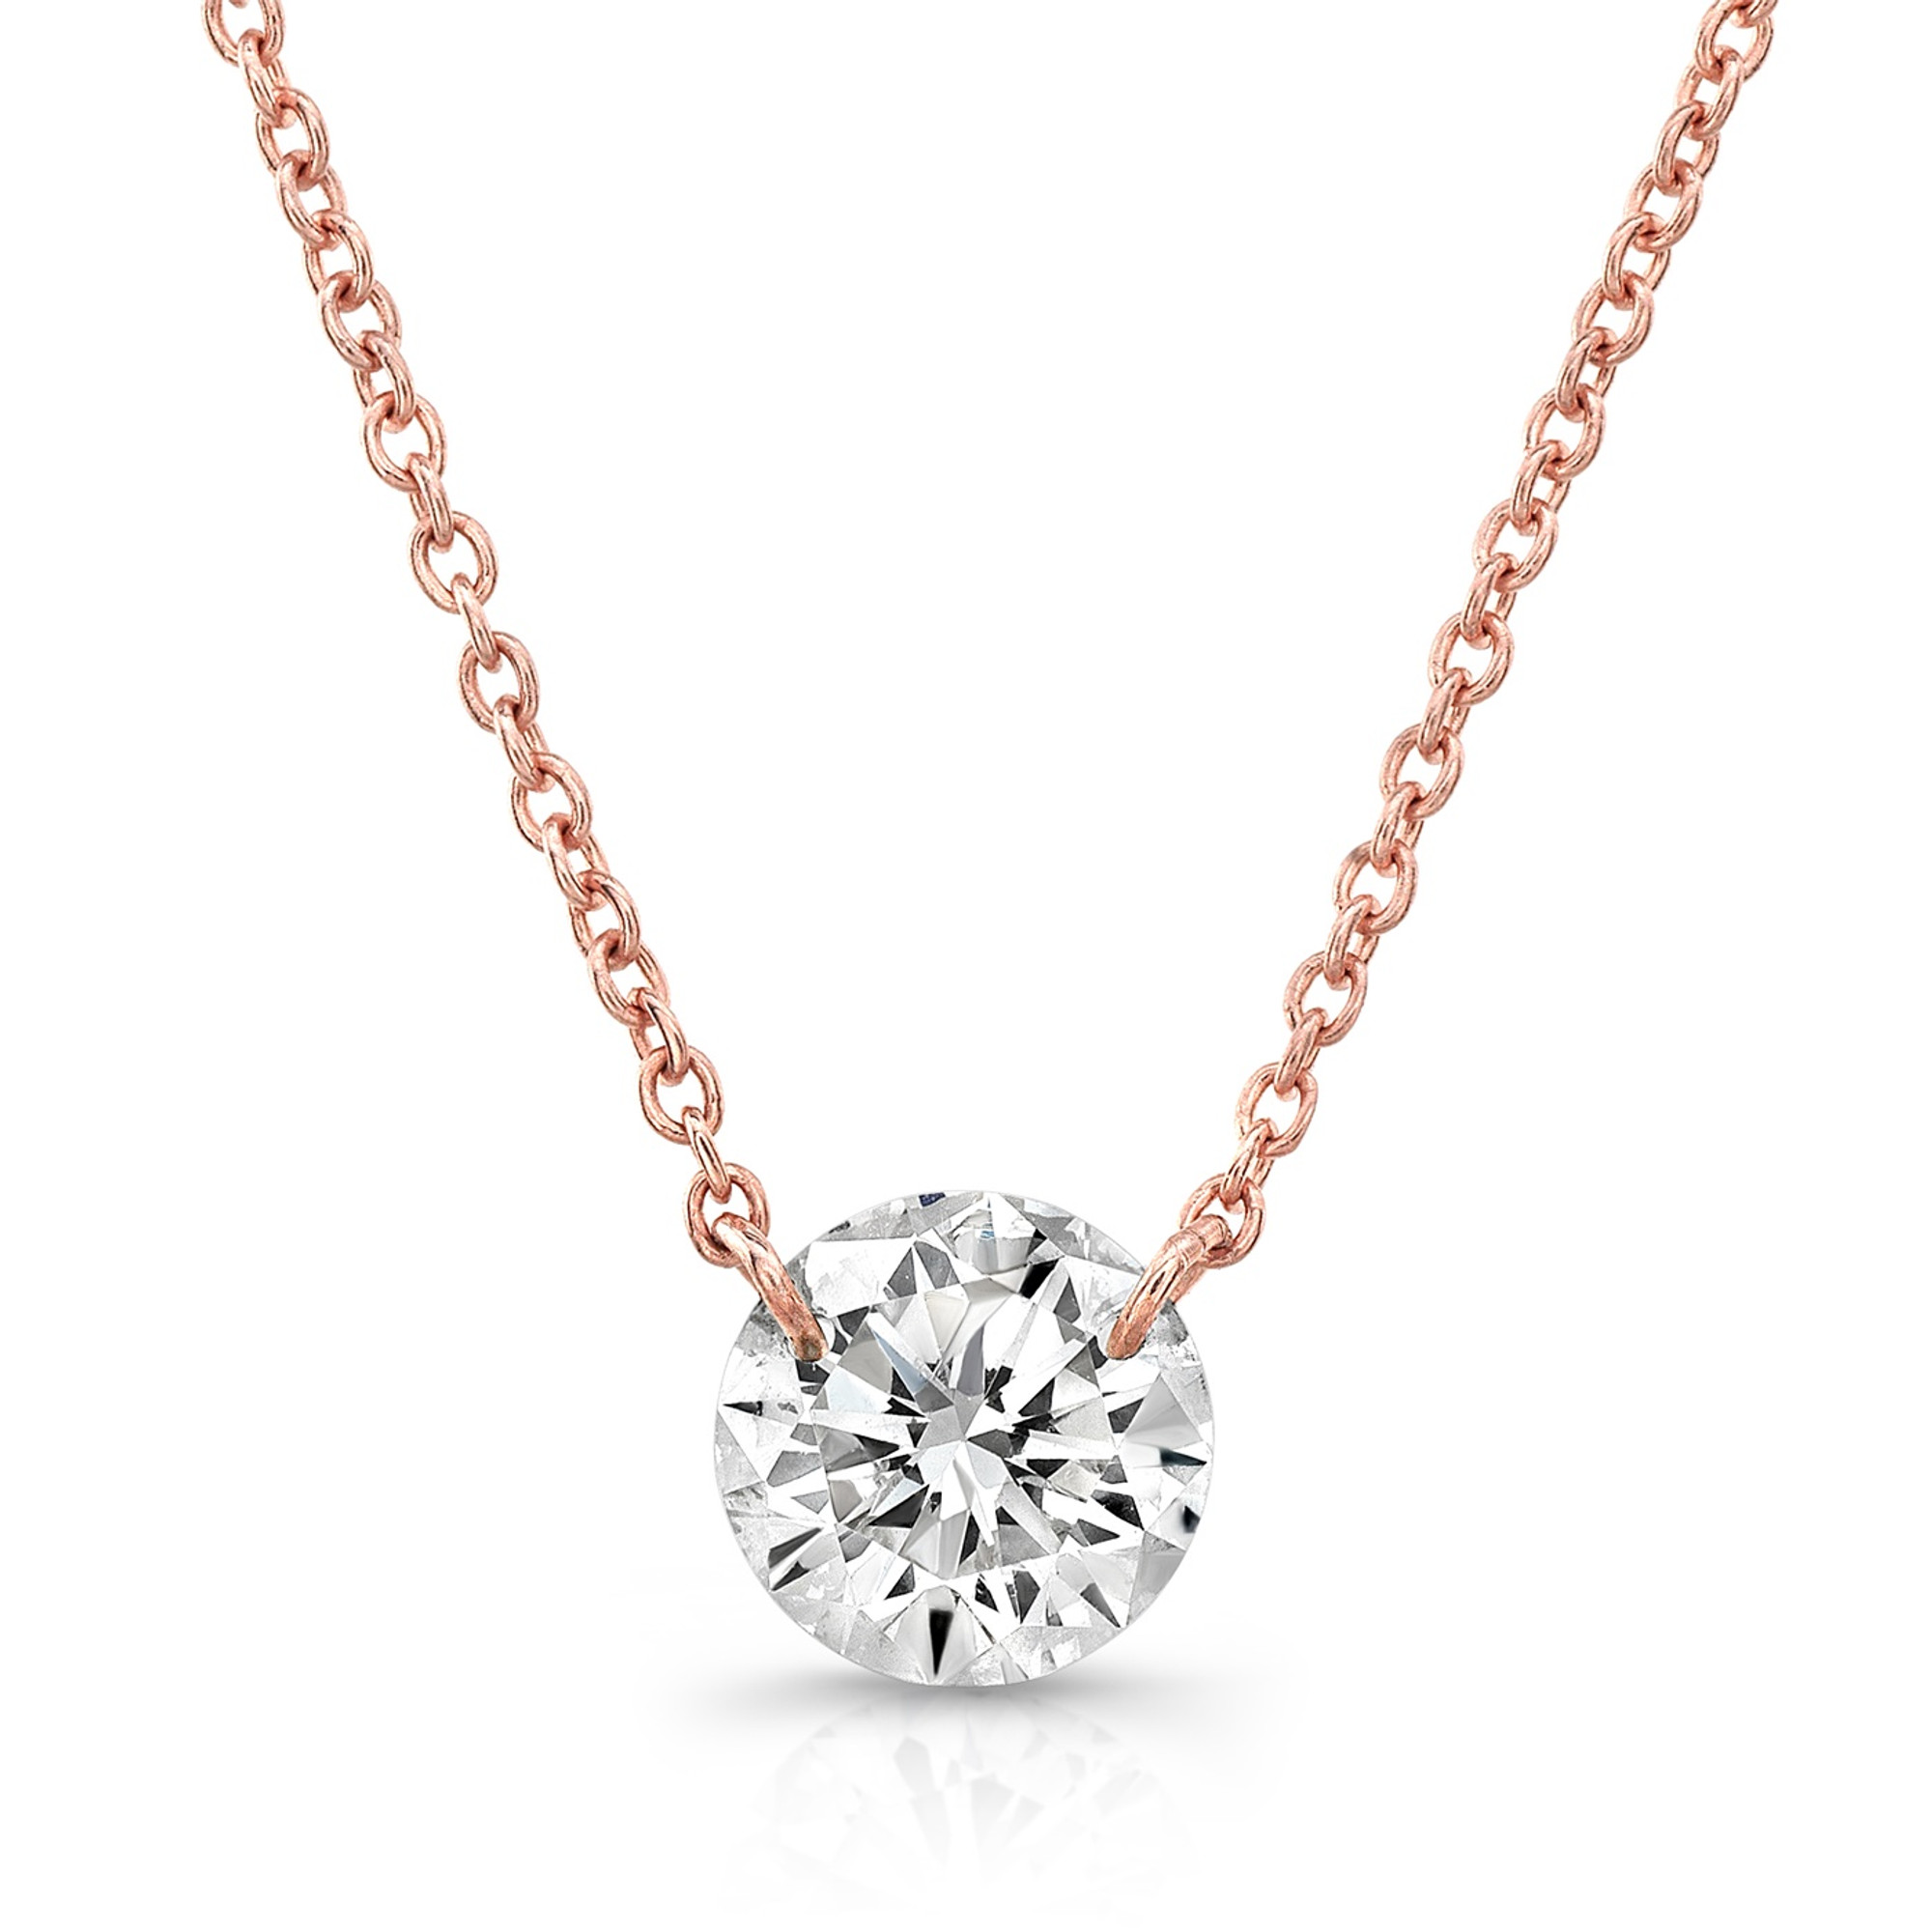 ZHUDJ 3ct Diamond Necklace For Women Zirconia Diamond Pendant Silver 925  Jewelry Engagement Wedding Party Gifts : Amazon.co.uk: Fashion